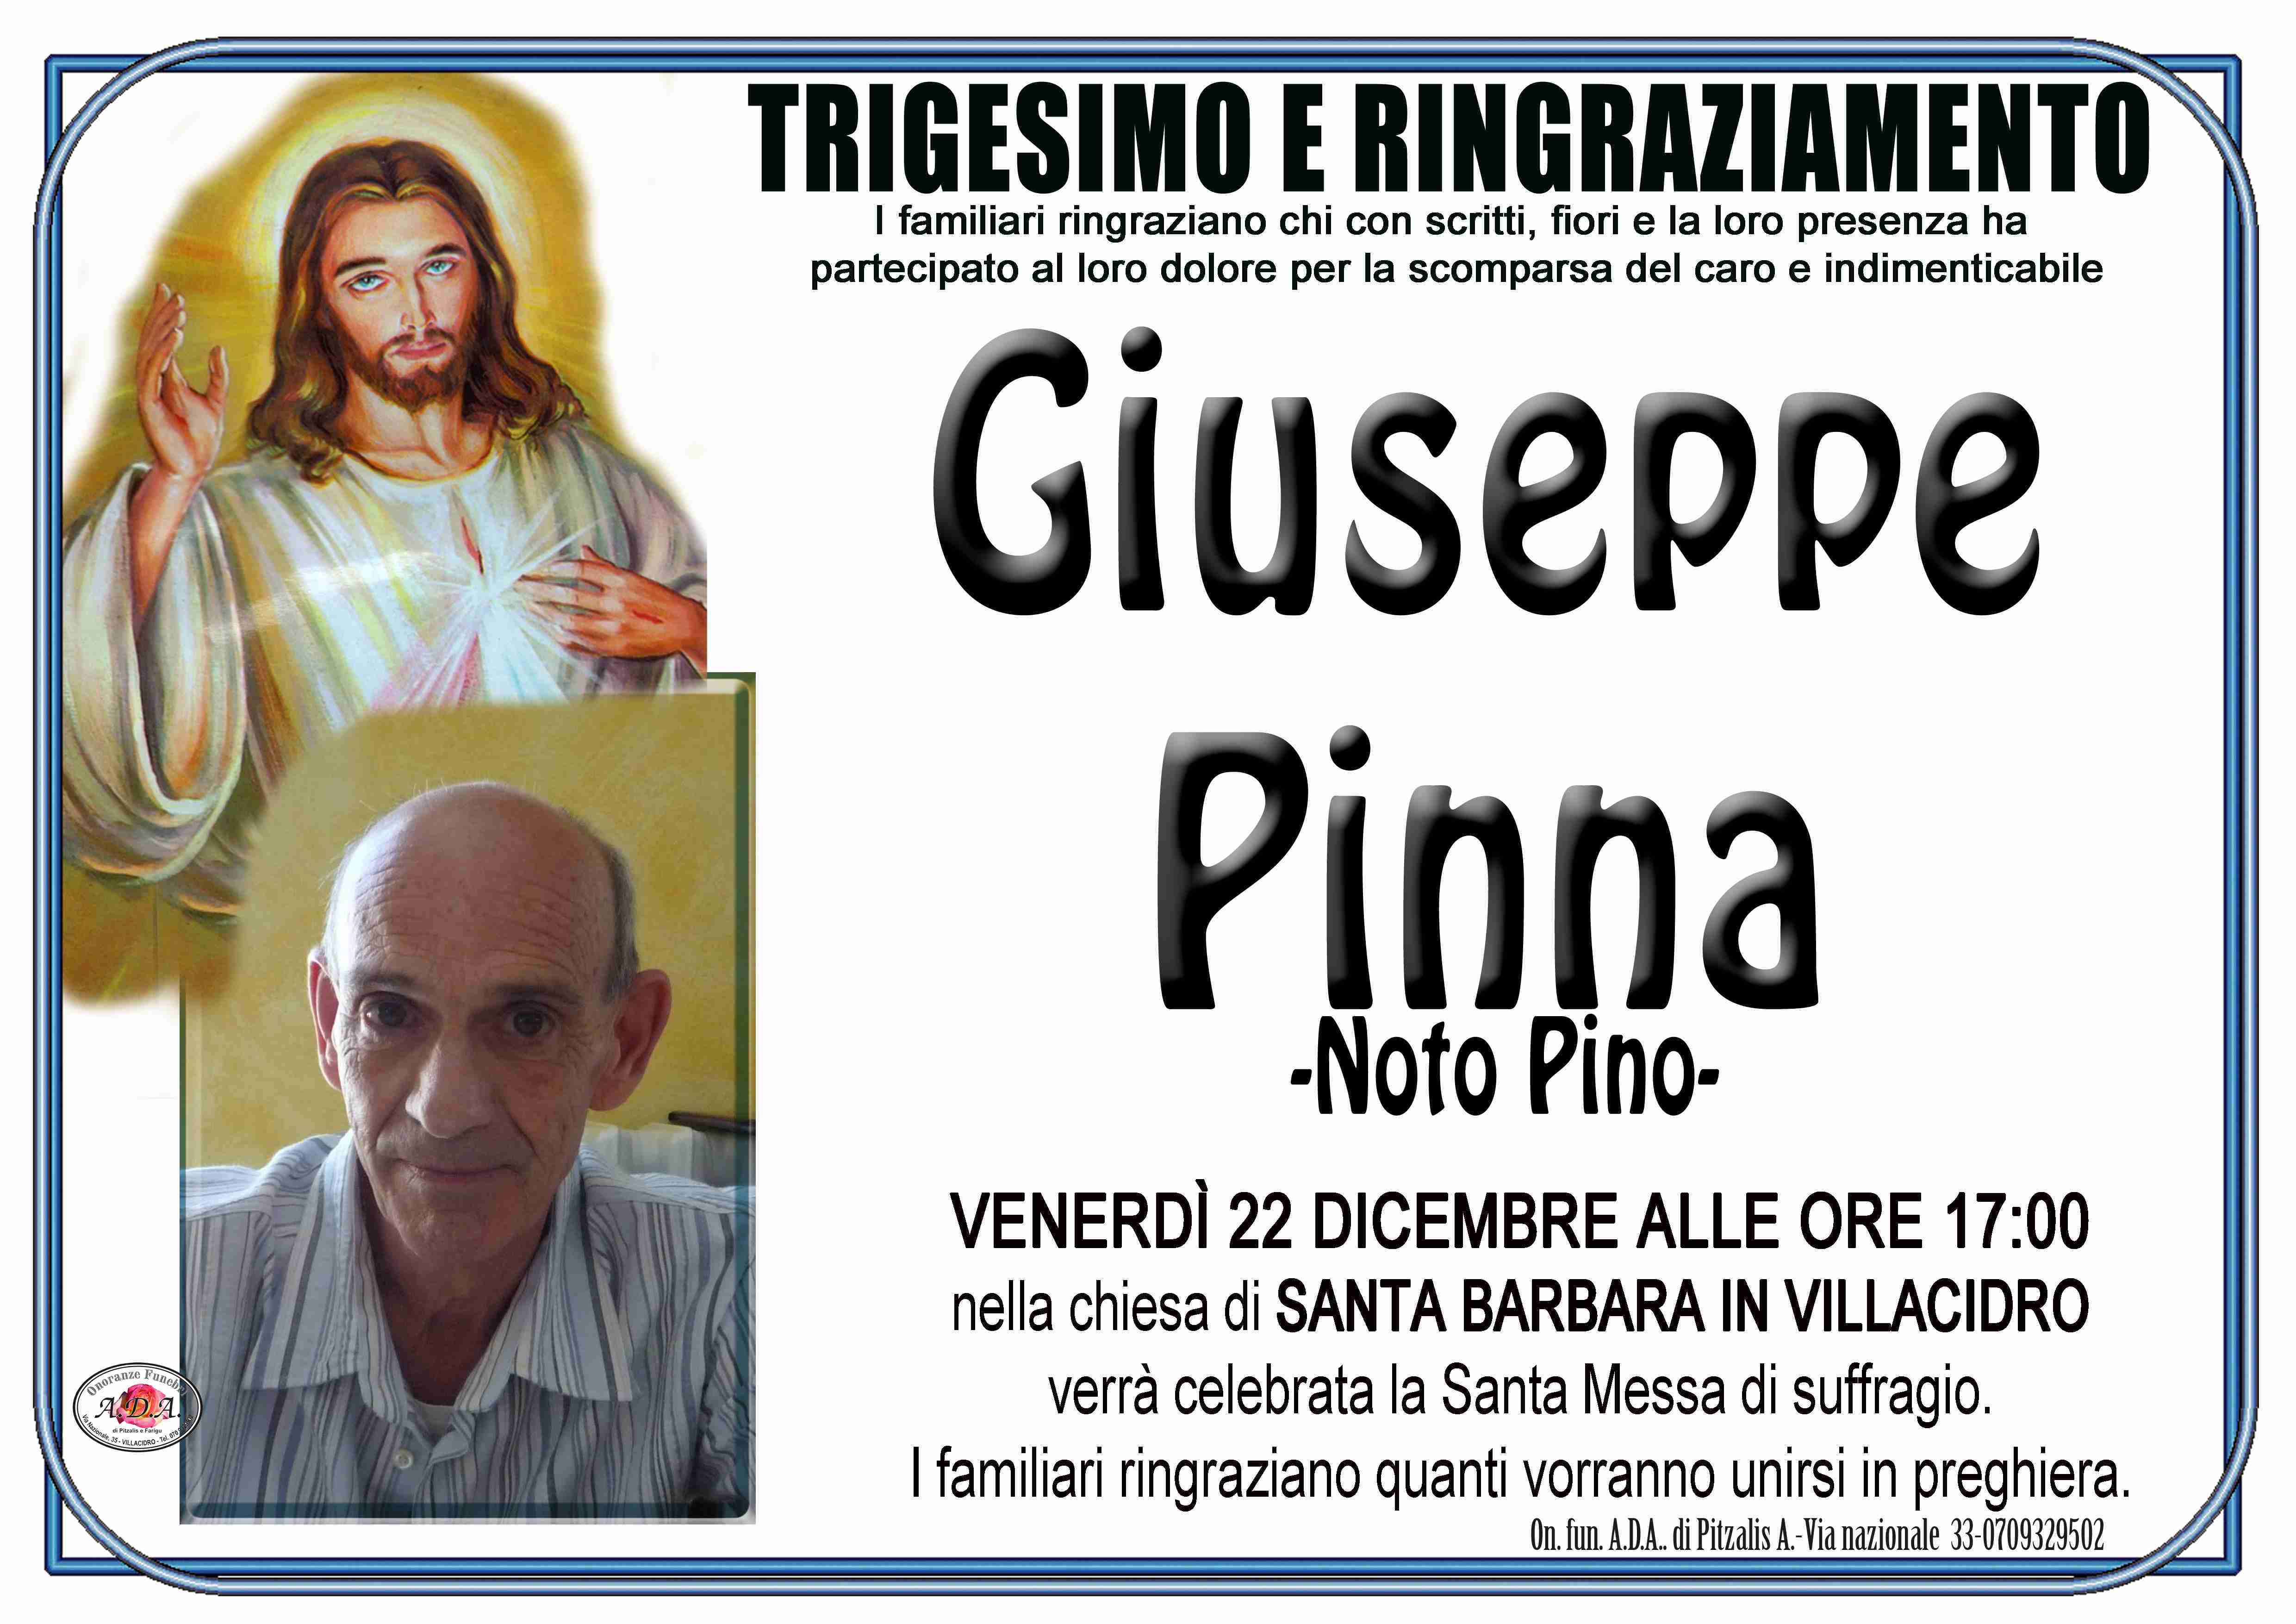 Giuseppe Pinna